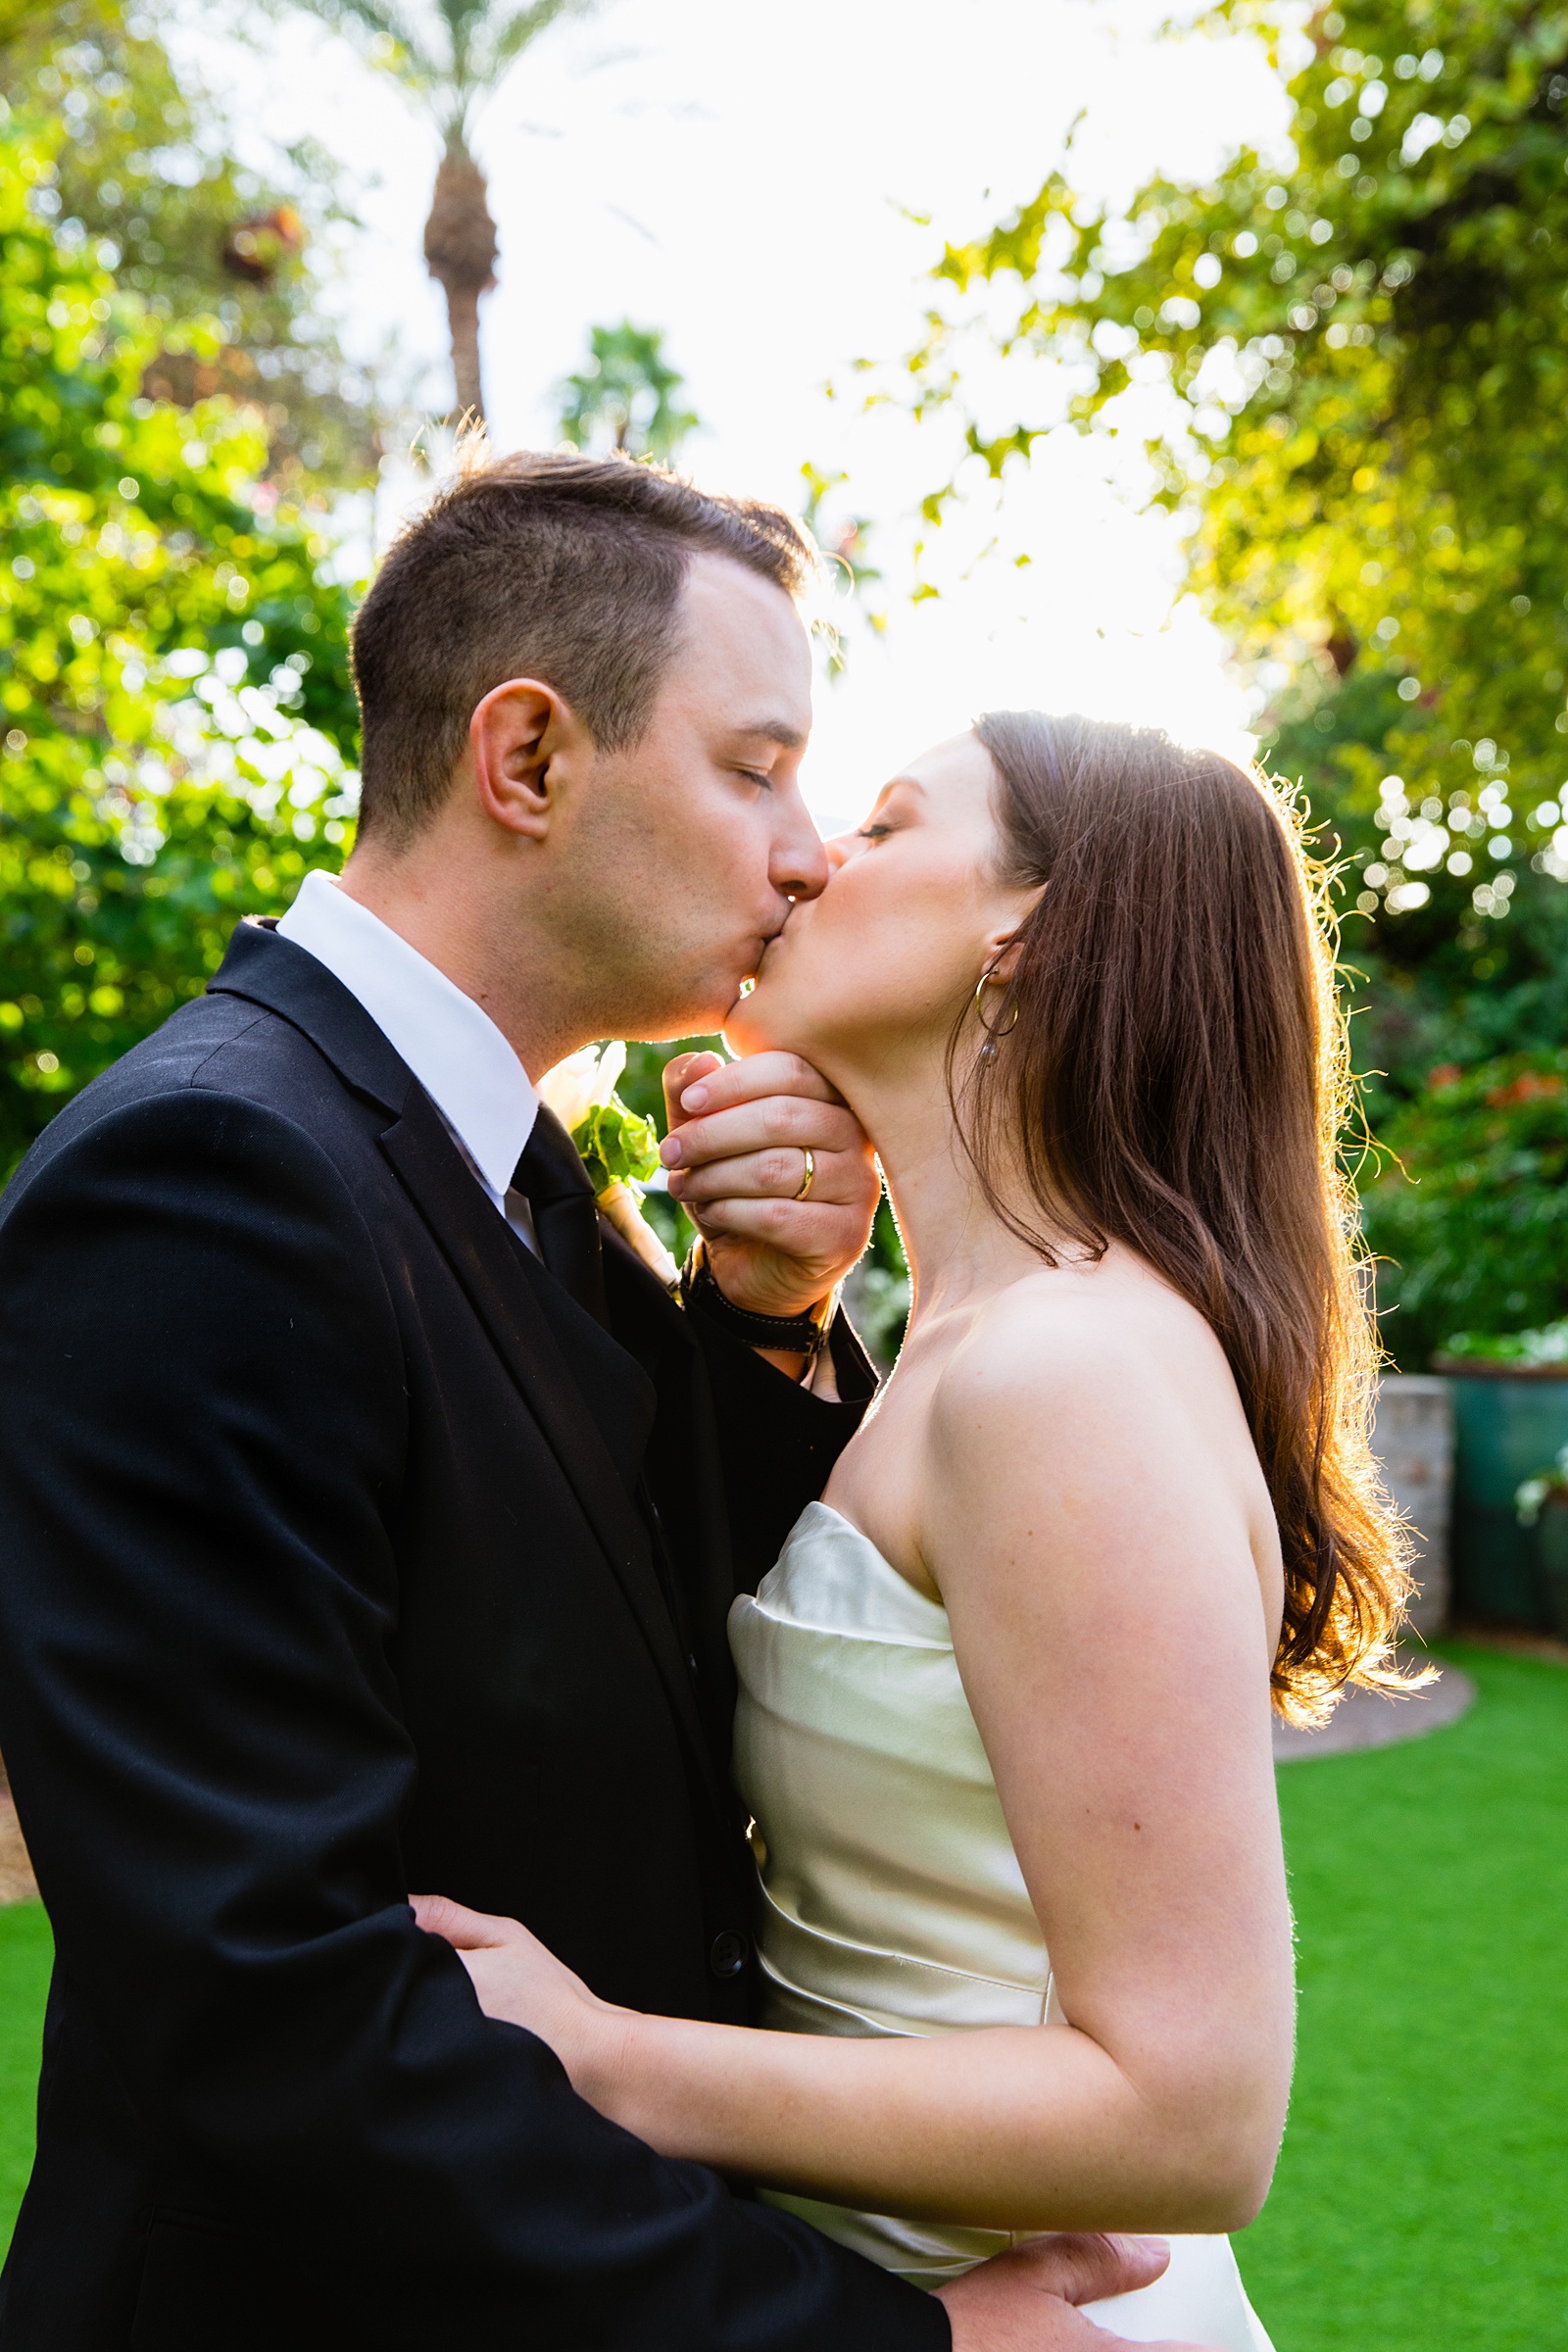 Bride & Groom share a kiss during their The Scott wedding by Arizona wedding photographer PMA Photography.